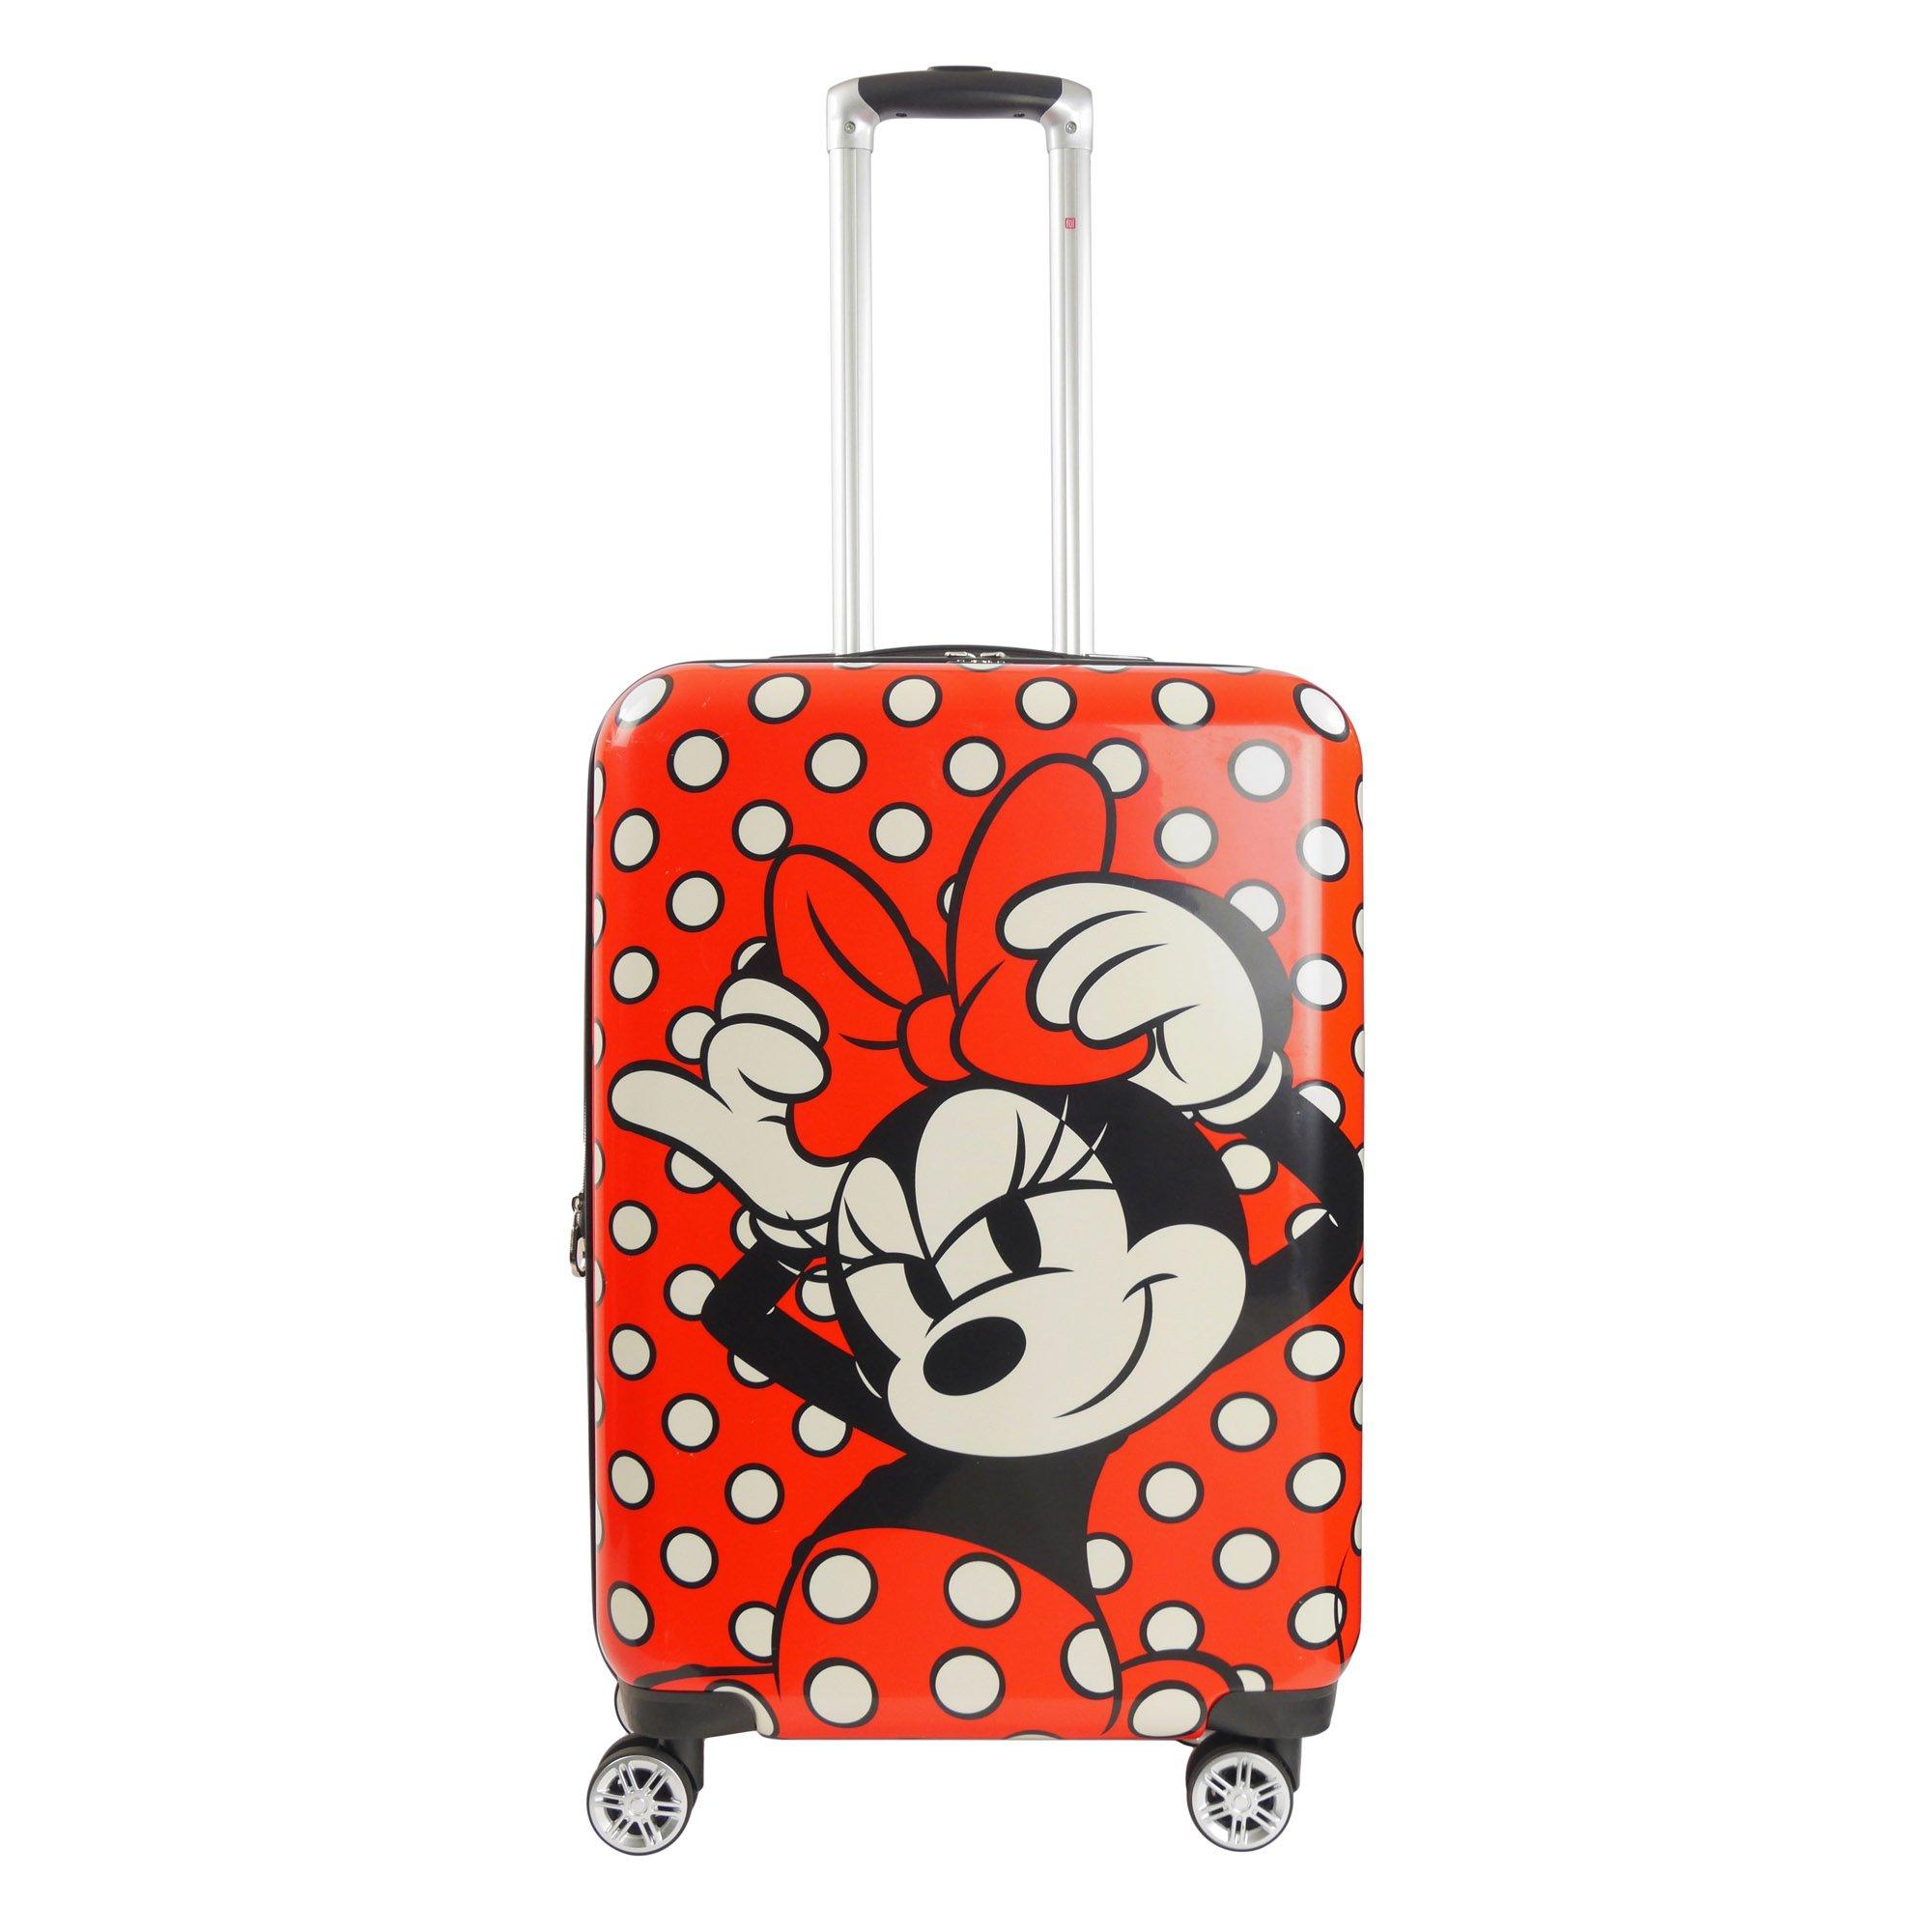 Disney FUL Minnie Mouse Printed Polka Dot II Hard-Sided Roller Luggage